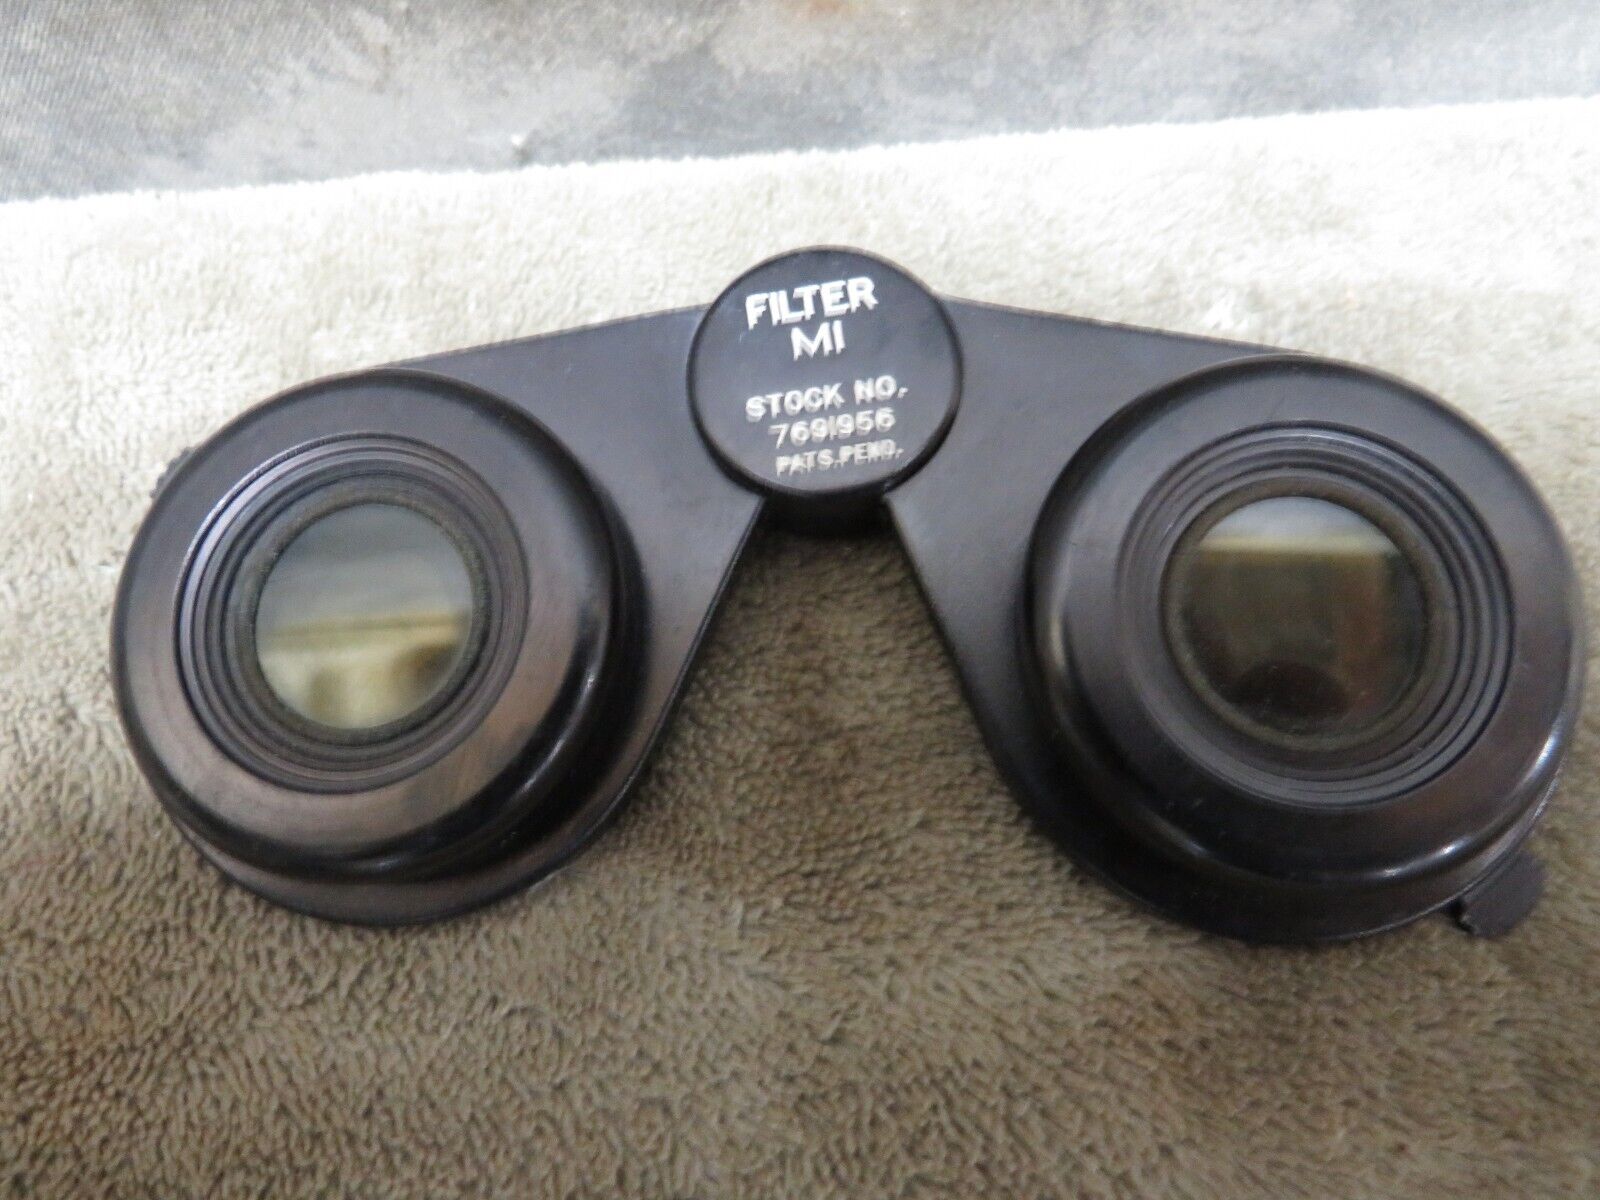 Vintage WWll Military Binocular FILTER MI Field Gear Equipment